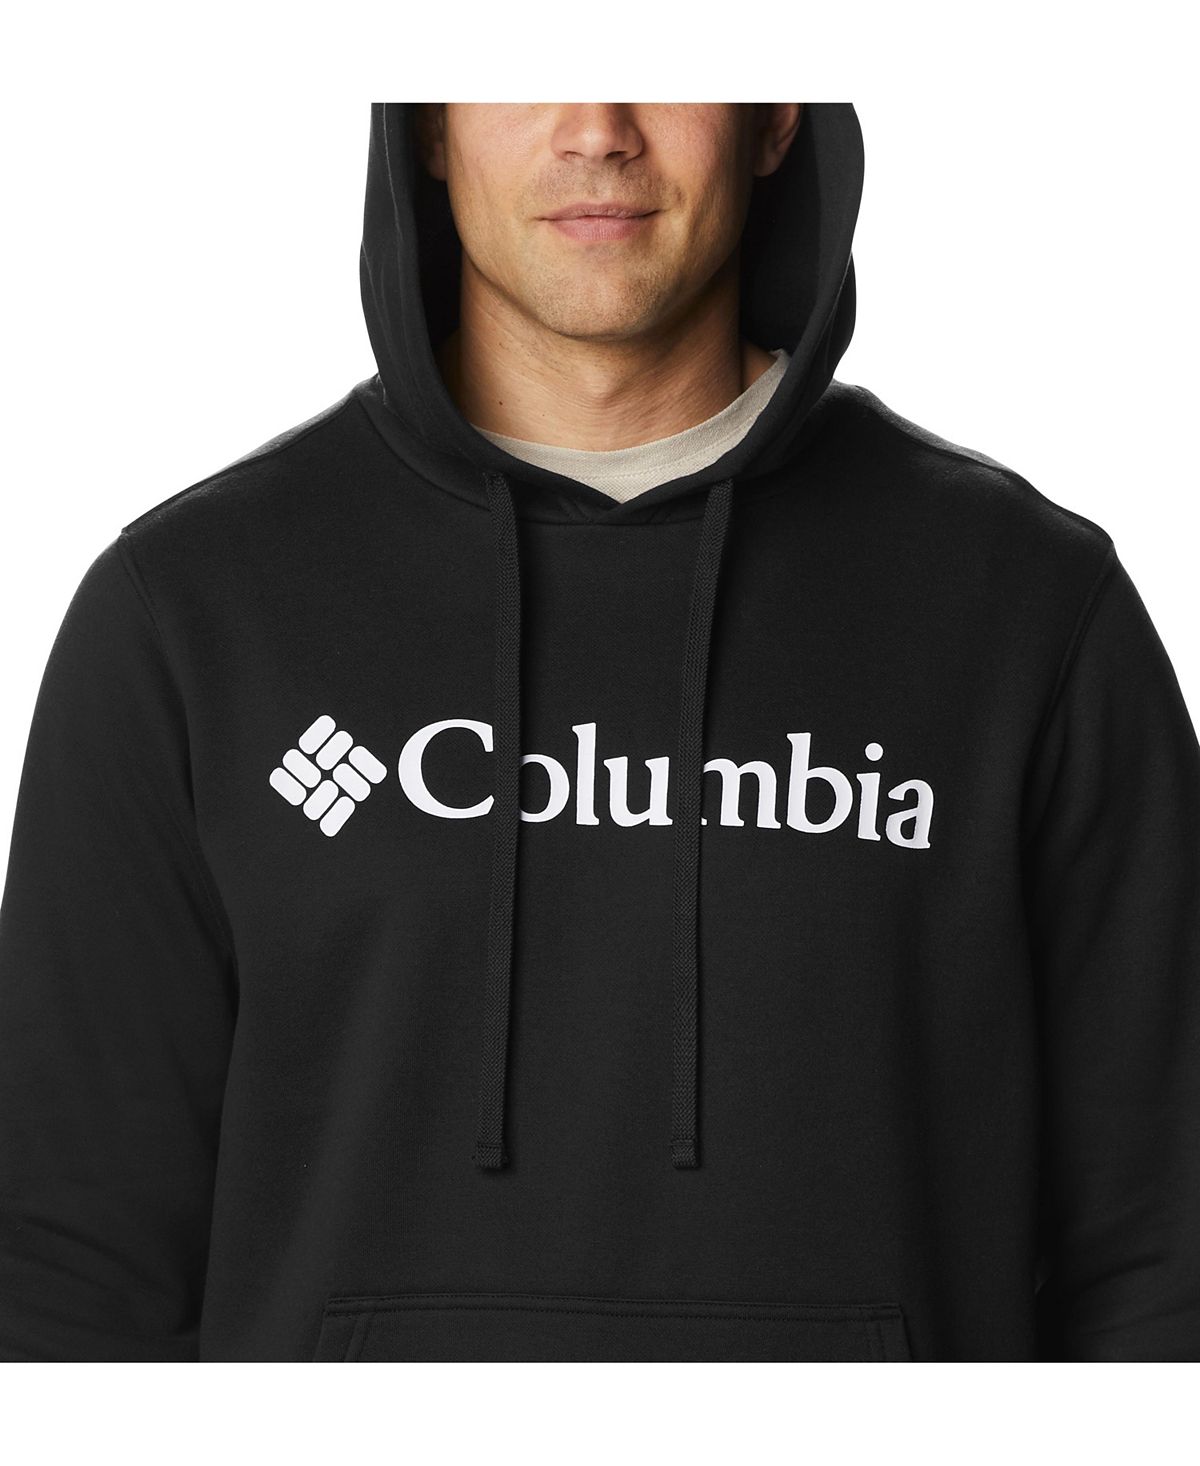 Columbia Logo Trek Hoodie Black, White